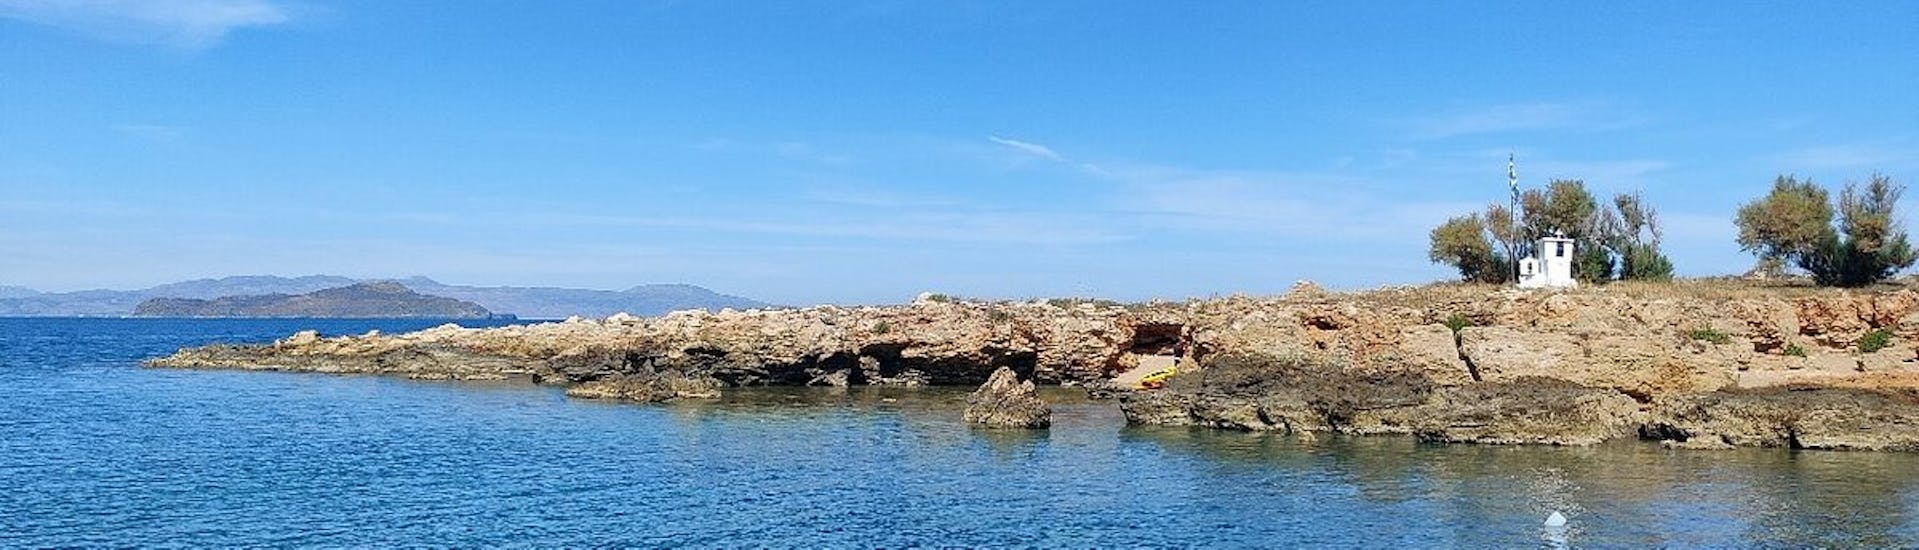 The coast of Lazaretta during a Glass-Bottom Boat Trip to Thodorou and Lazaretta.